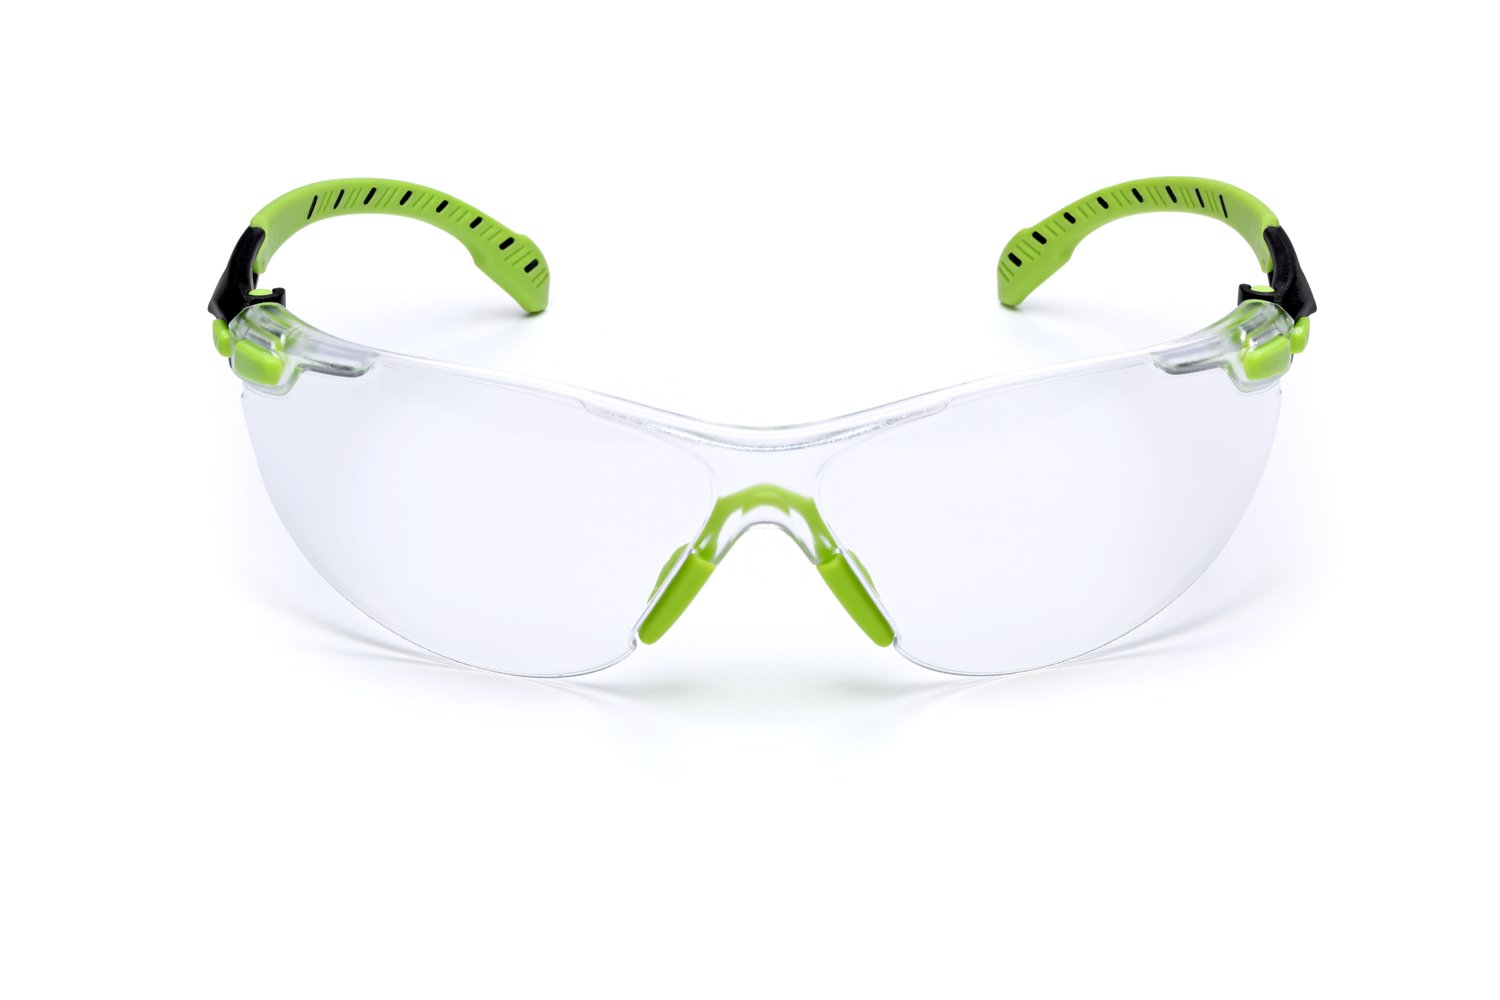 7100079049 - 3M Solus 1000-Series Safety Glasses S1201SGAF, Green/Black, Clear
Scotchgard Anti-Fog Lens, 20 EA/Case